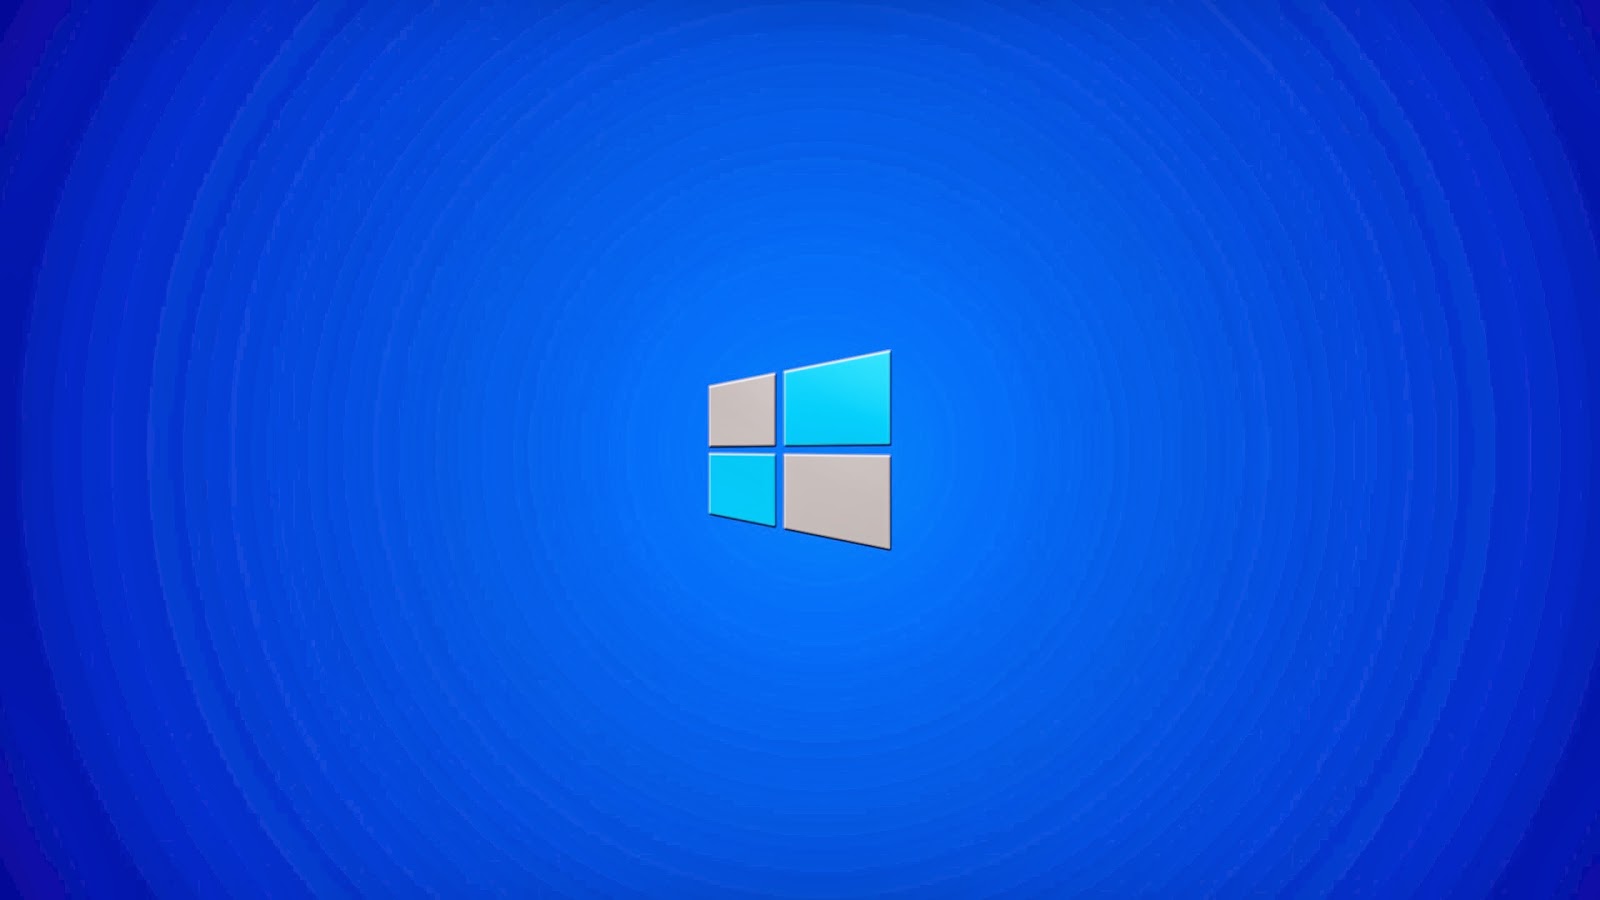 windows 10 wallpaper hd for mobile,blue,operating system,cobalt blue,azure,electric blue